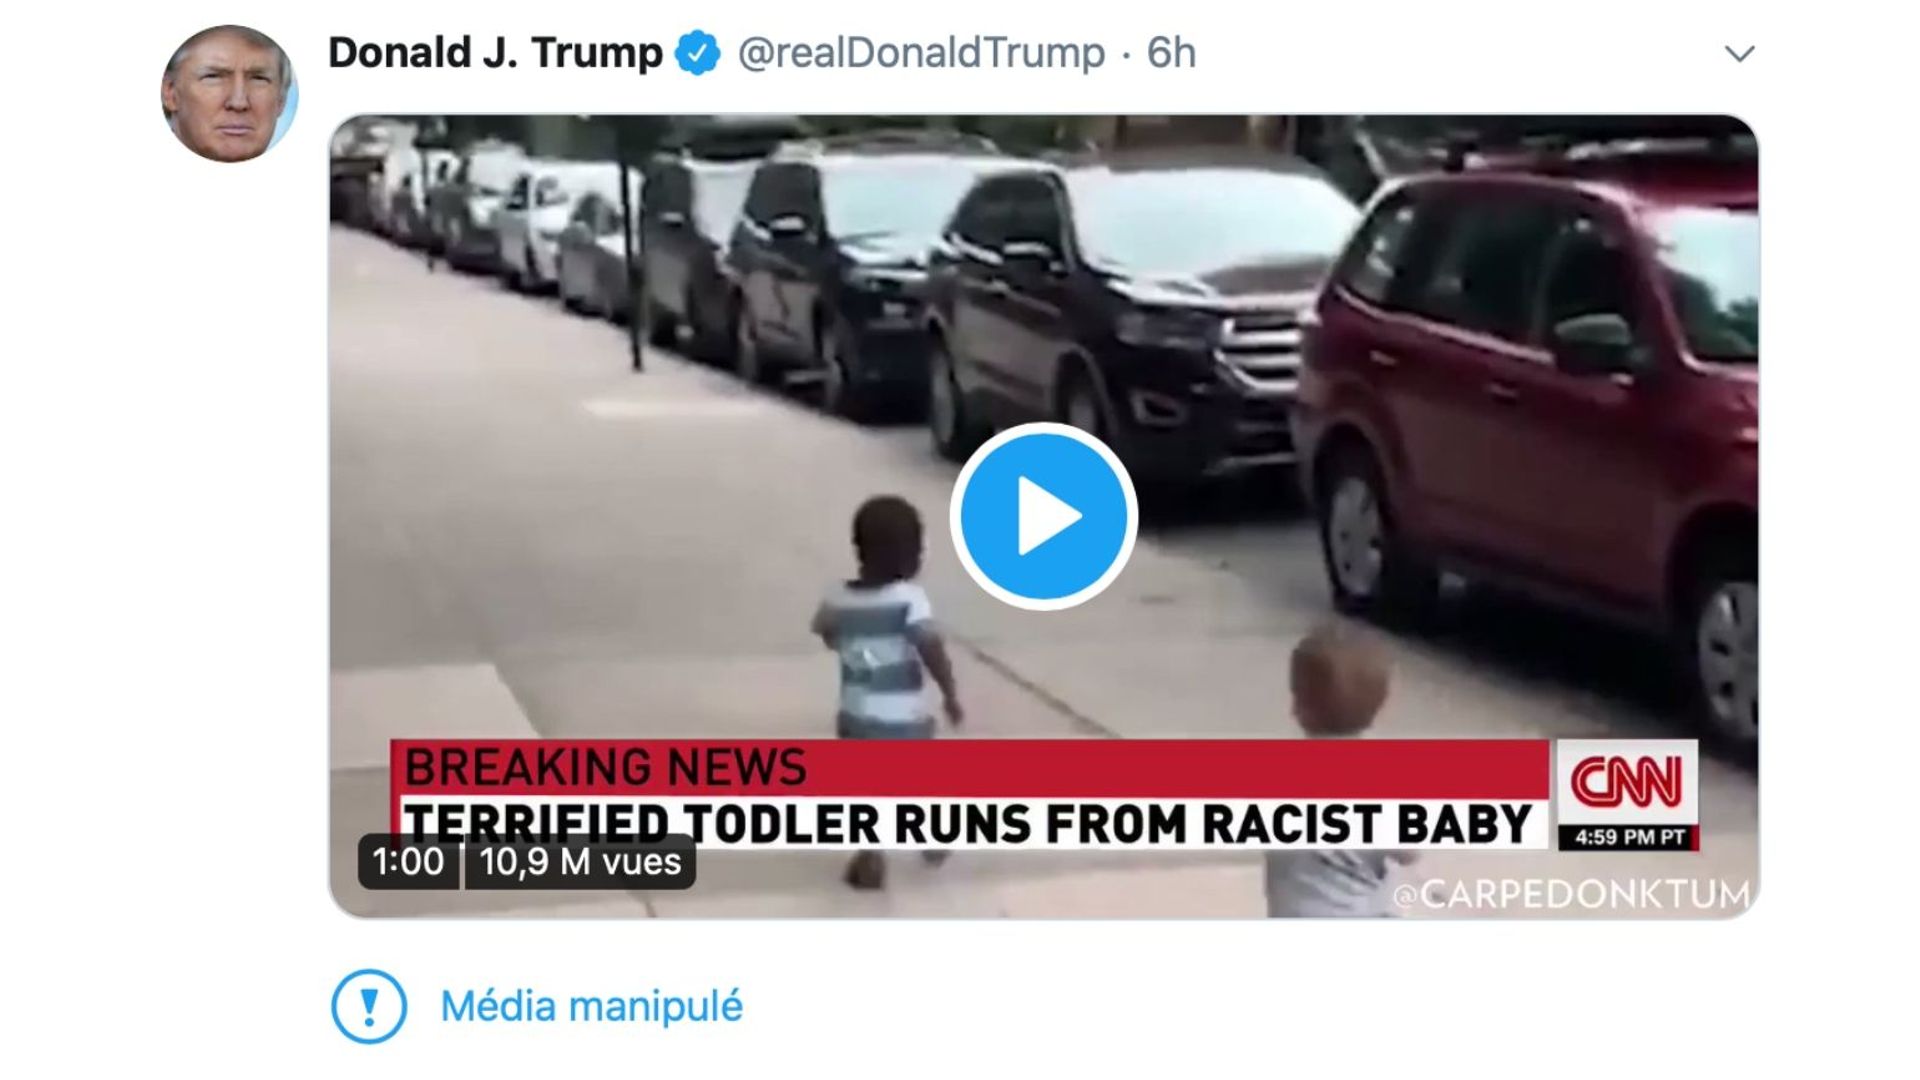 Twitter qualifie un tweet de Donald Trump de “média manipulé”